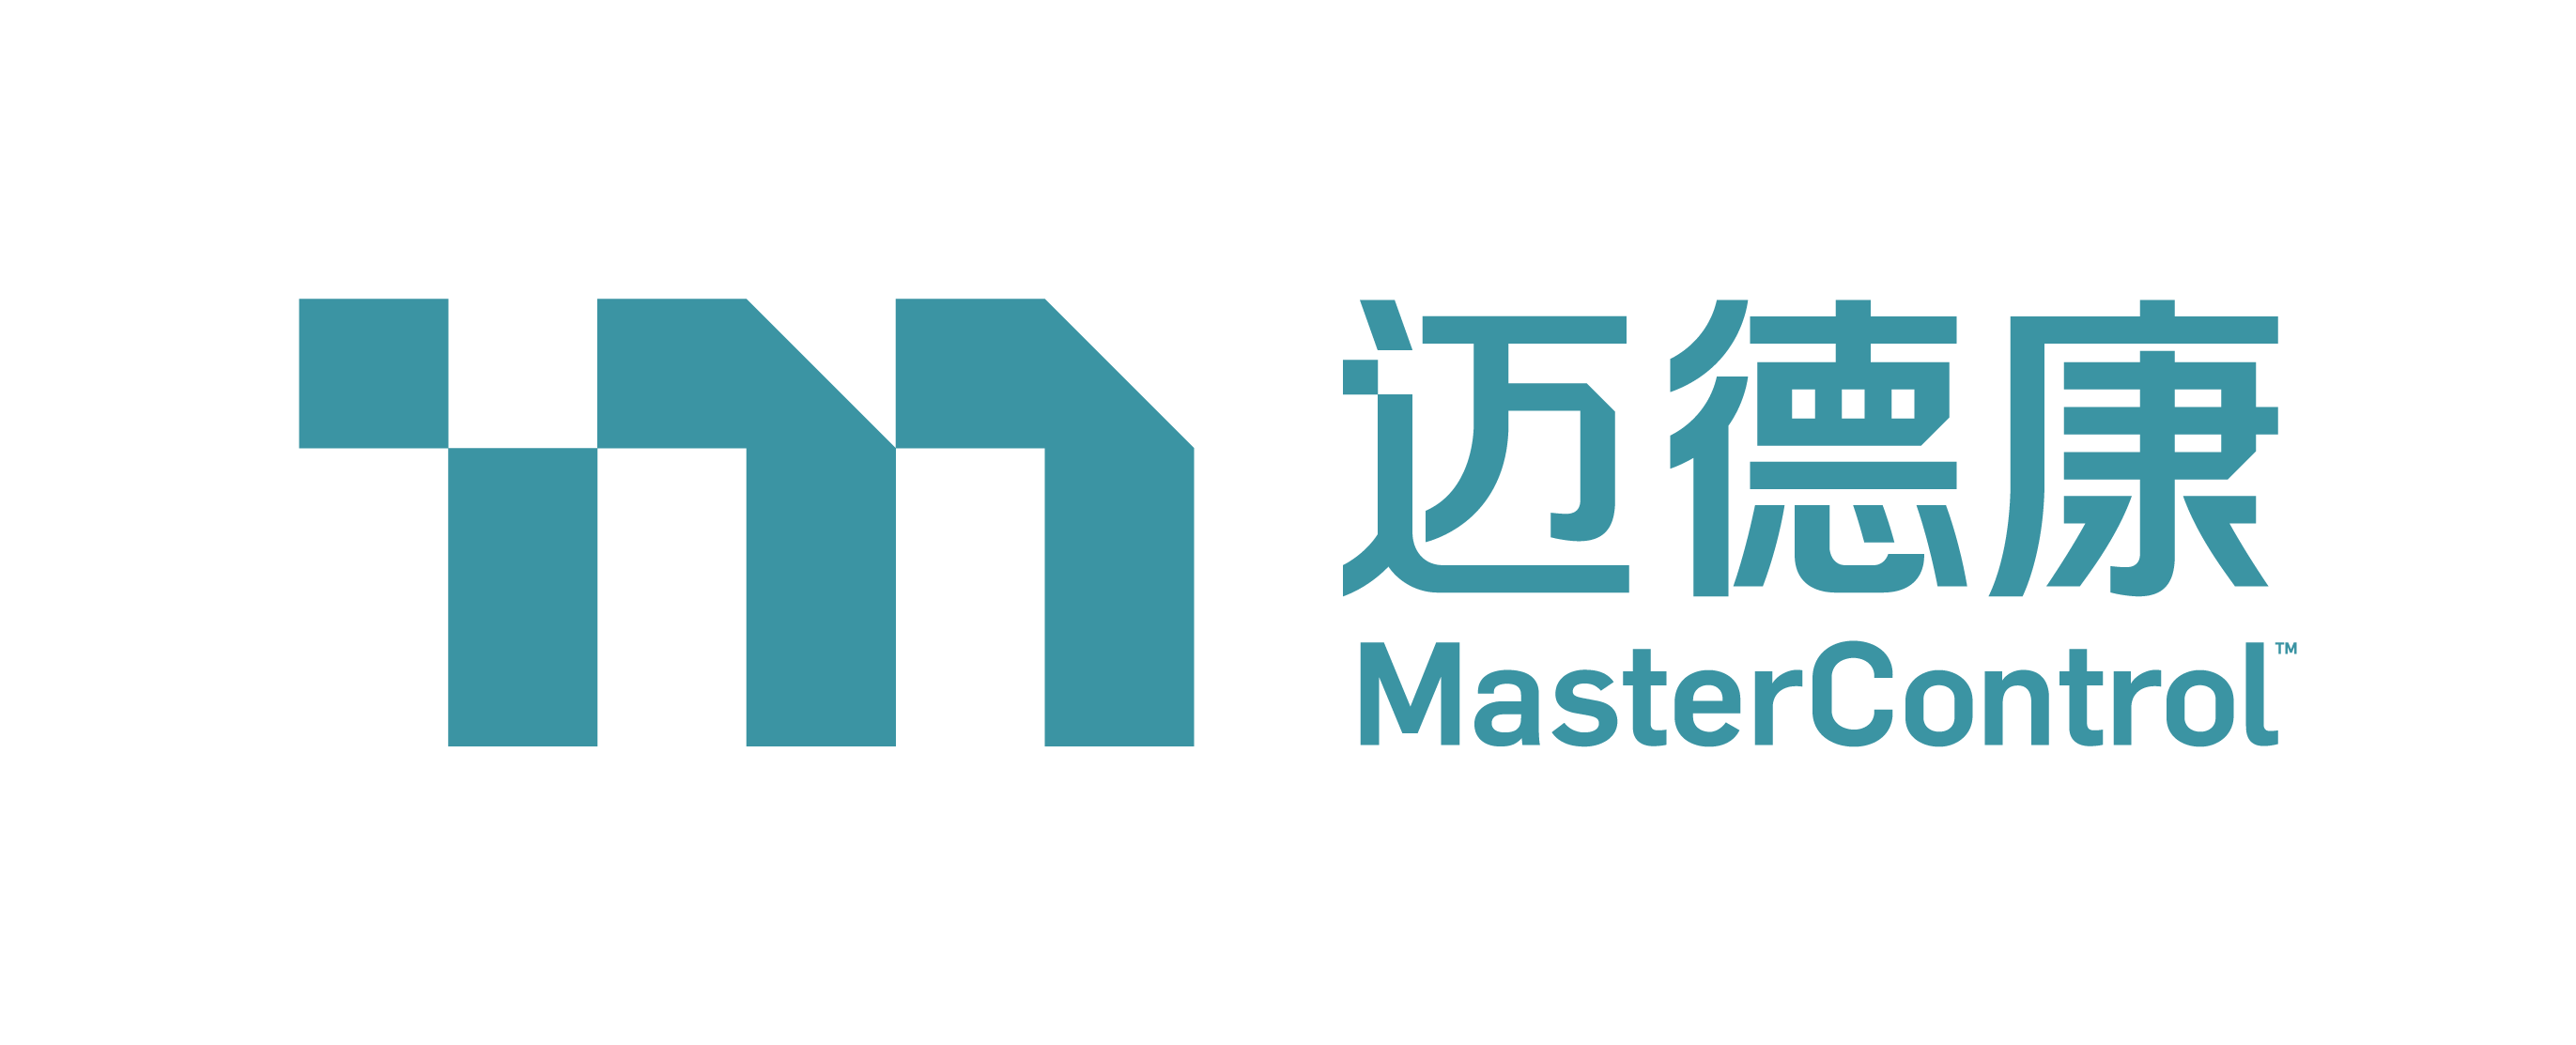 MasterControl在全球推出Ma